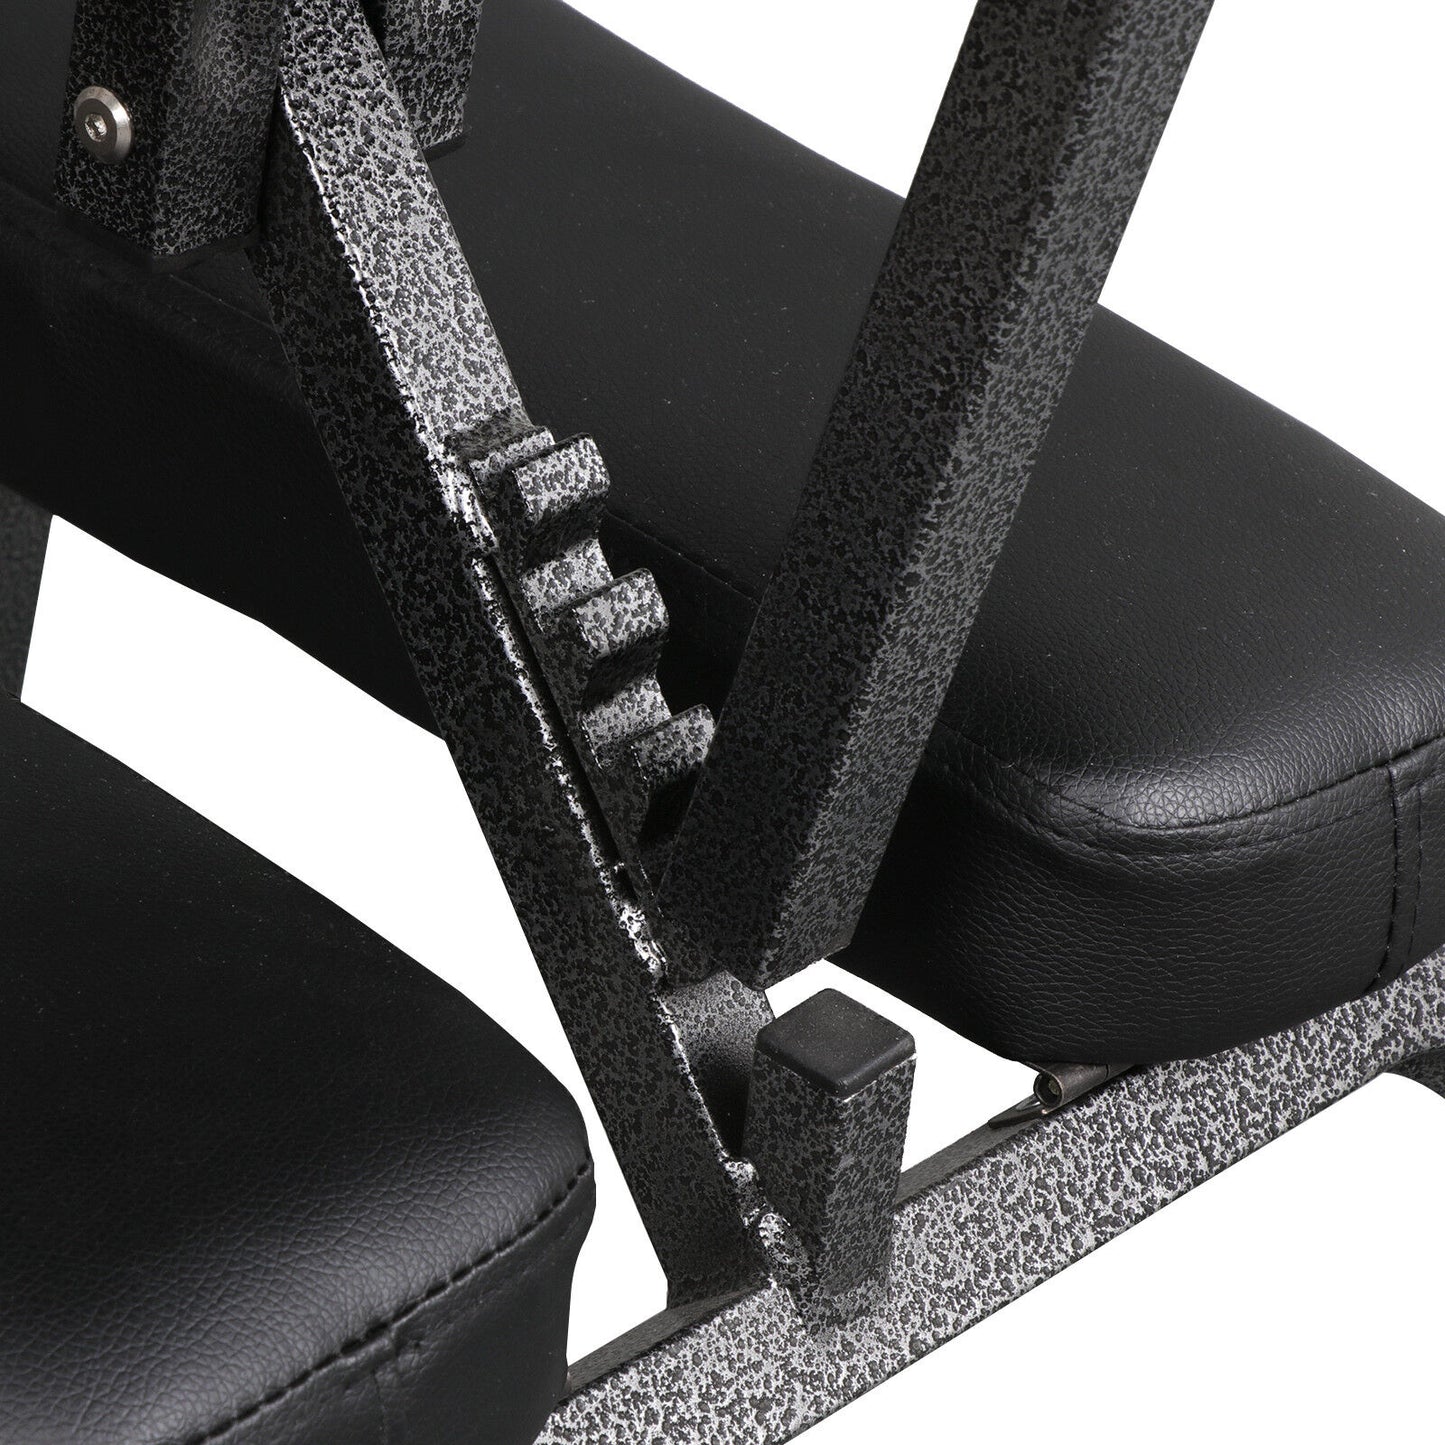 PU Leather Massage Chair Pad Portable Folding Travel Tattoo Spa Salon